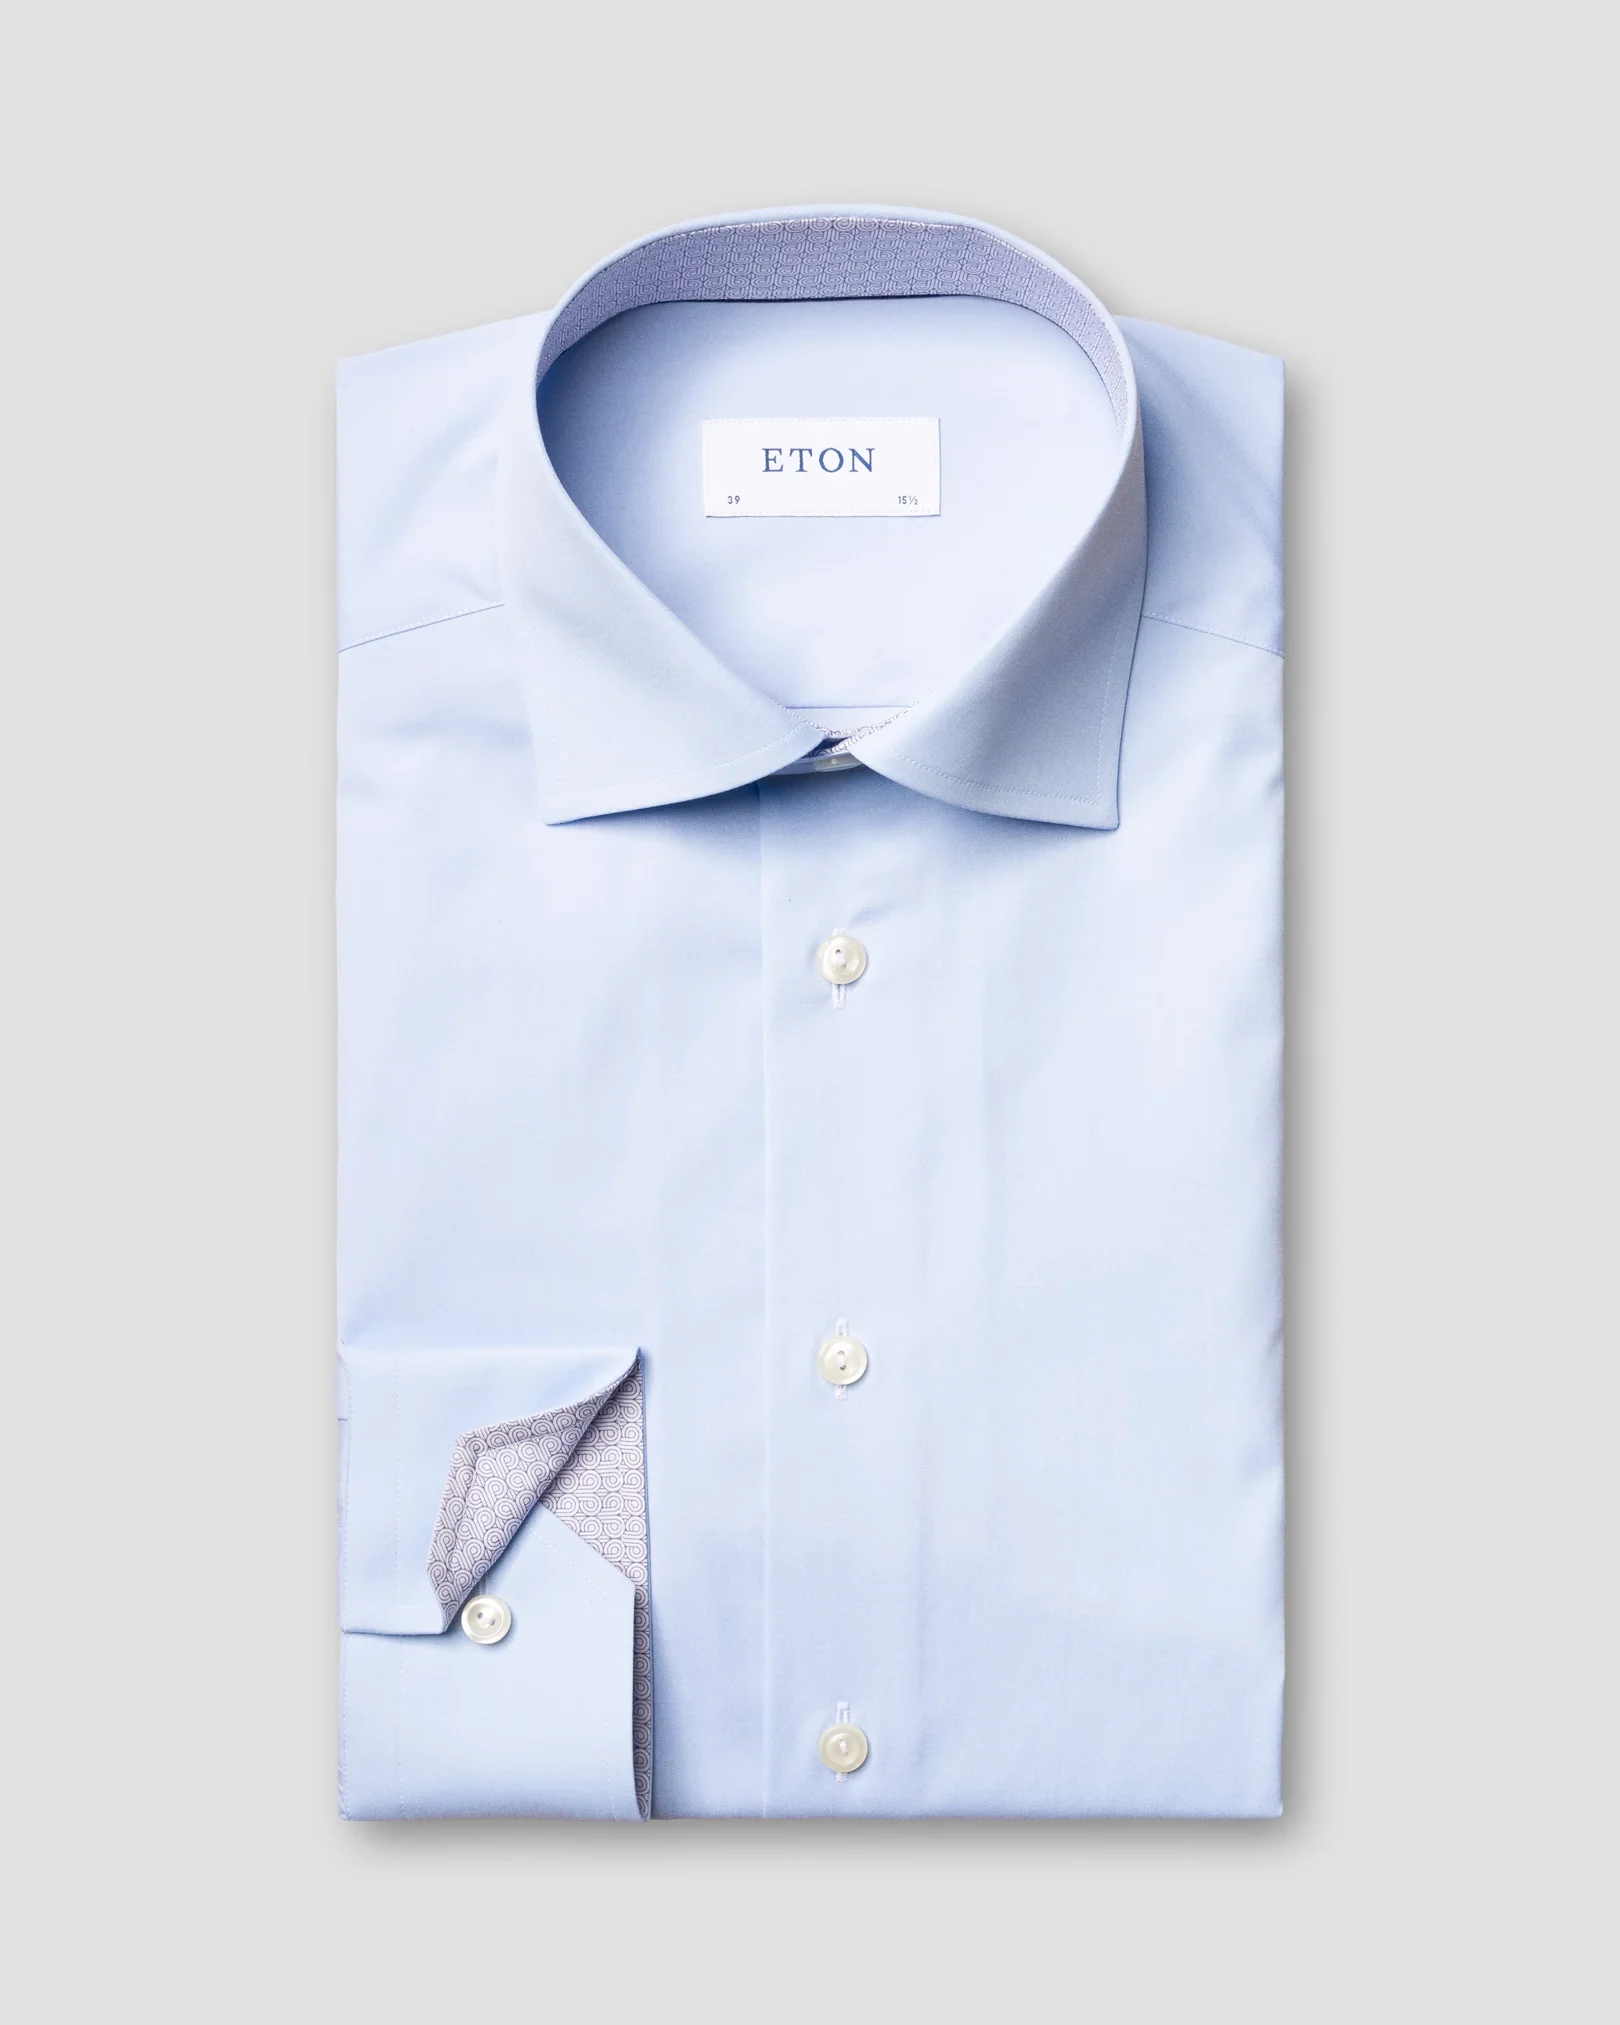 Eton - blue poplin shirt art deco details